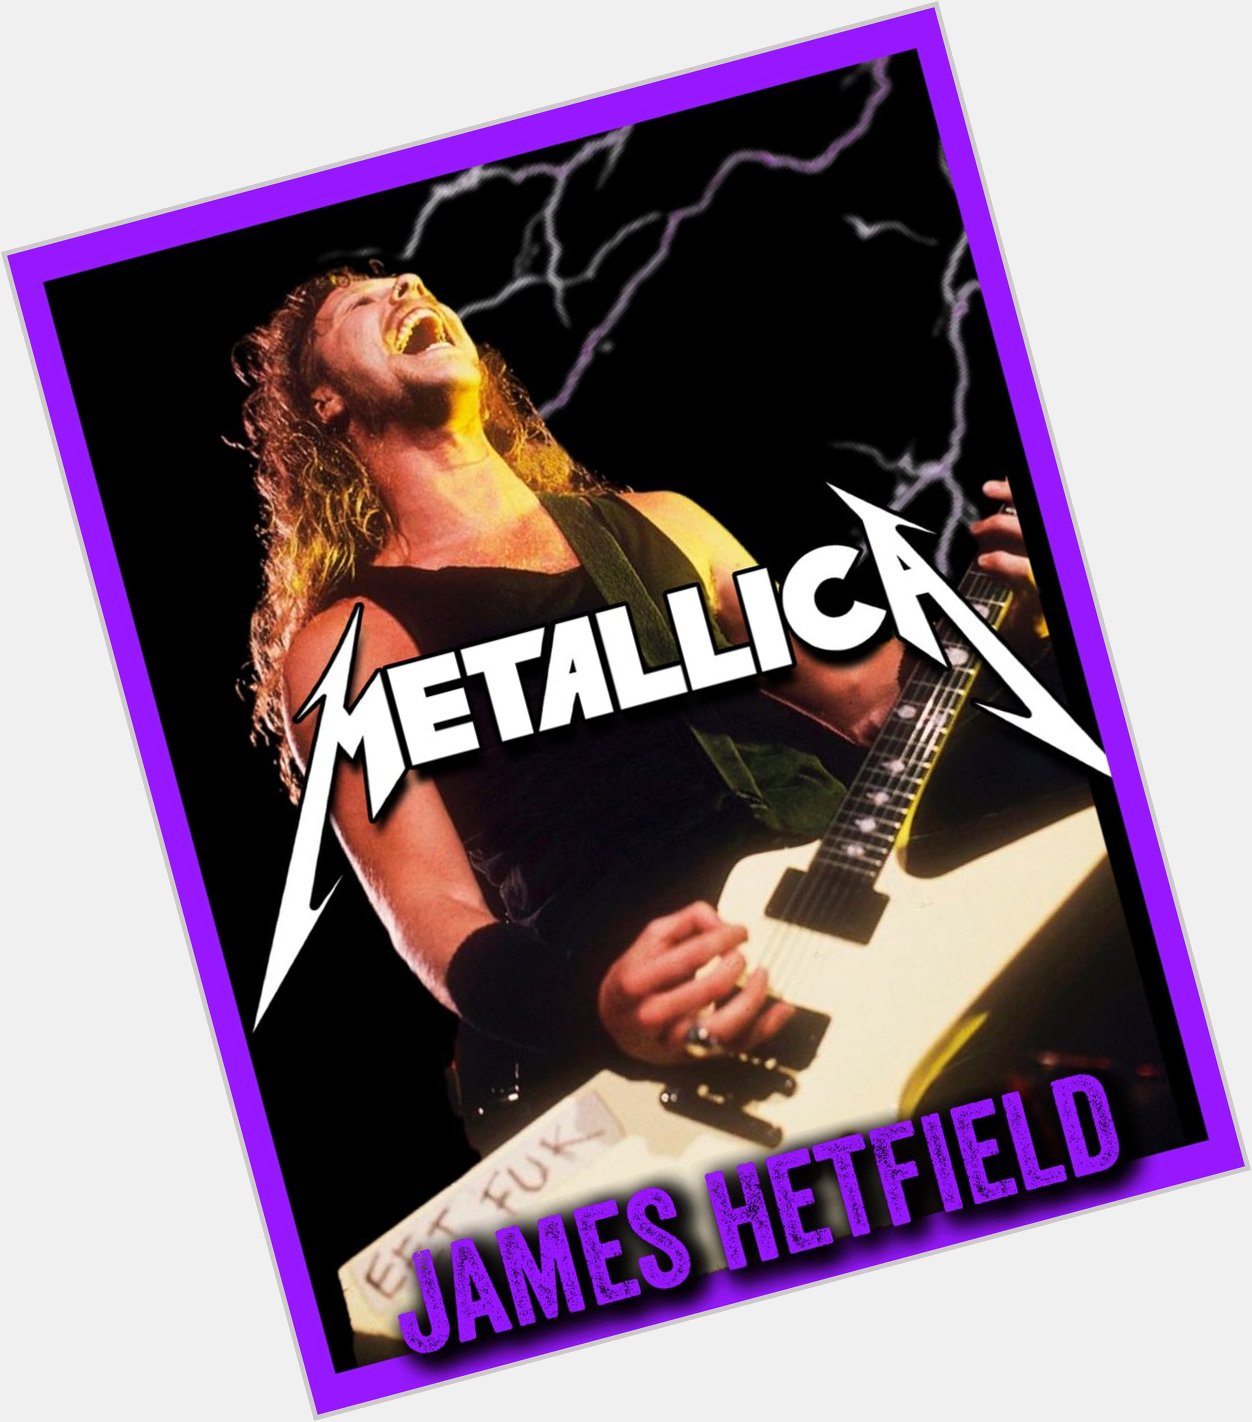 Happy Birthday James Hetfield
Lead singer/guitarist Metallica 
August 3, 1963 Downey, California 